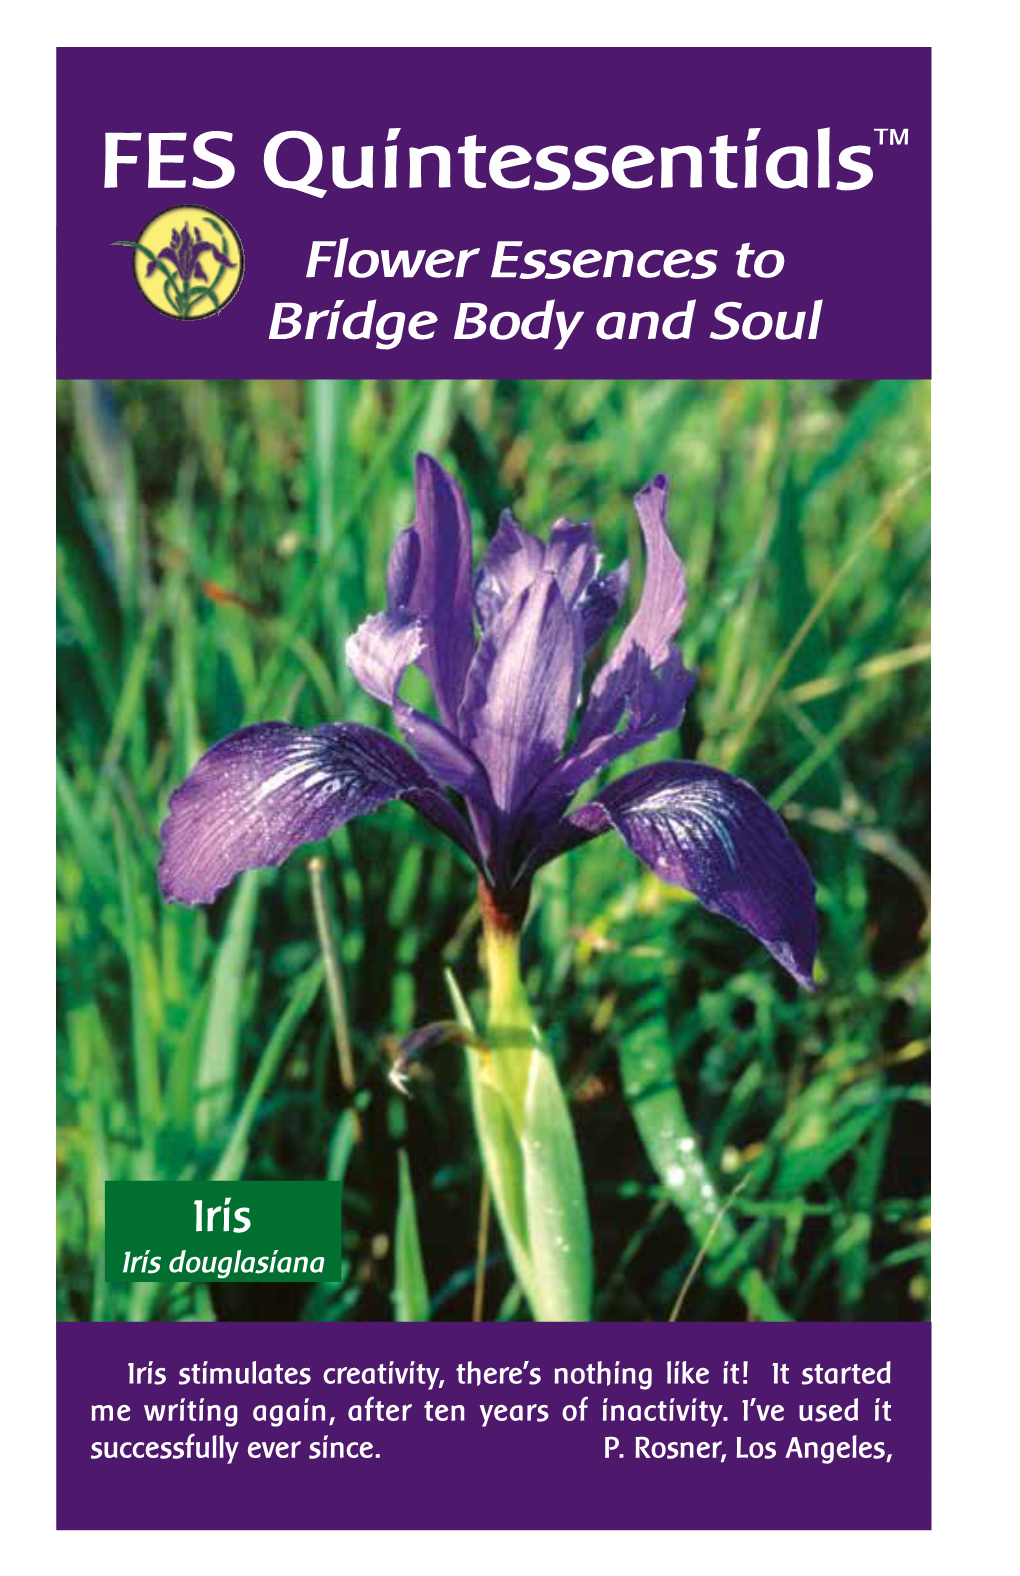 FES Quintessentials™ Flower Essences to Bridge Body and Soul